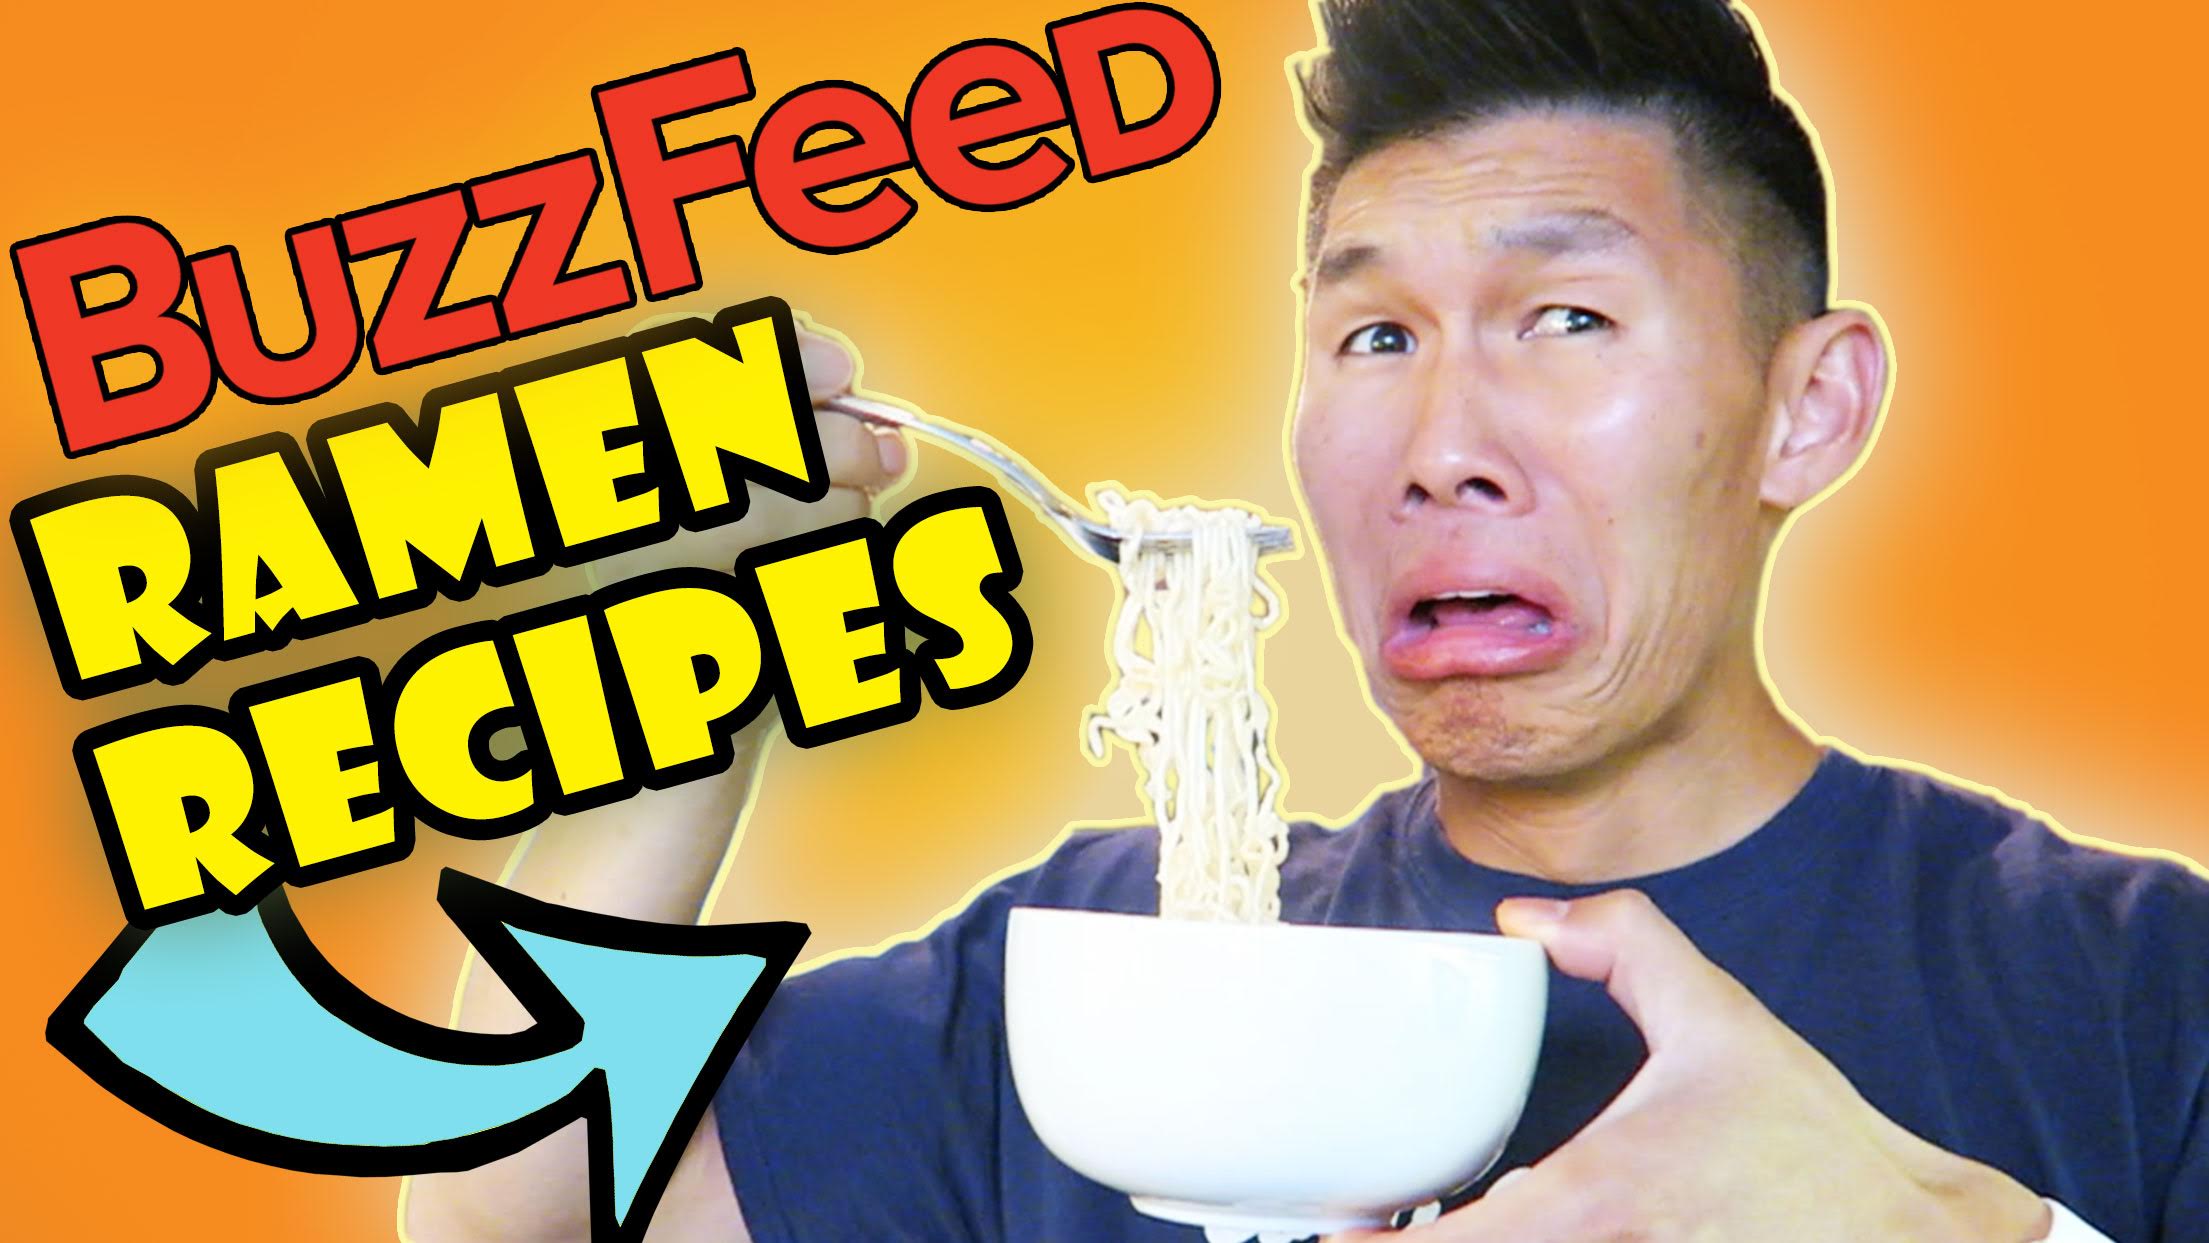 Buzzfeed Food Ramen Recipes Taste Test